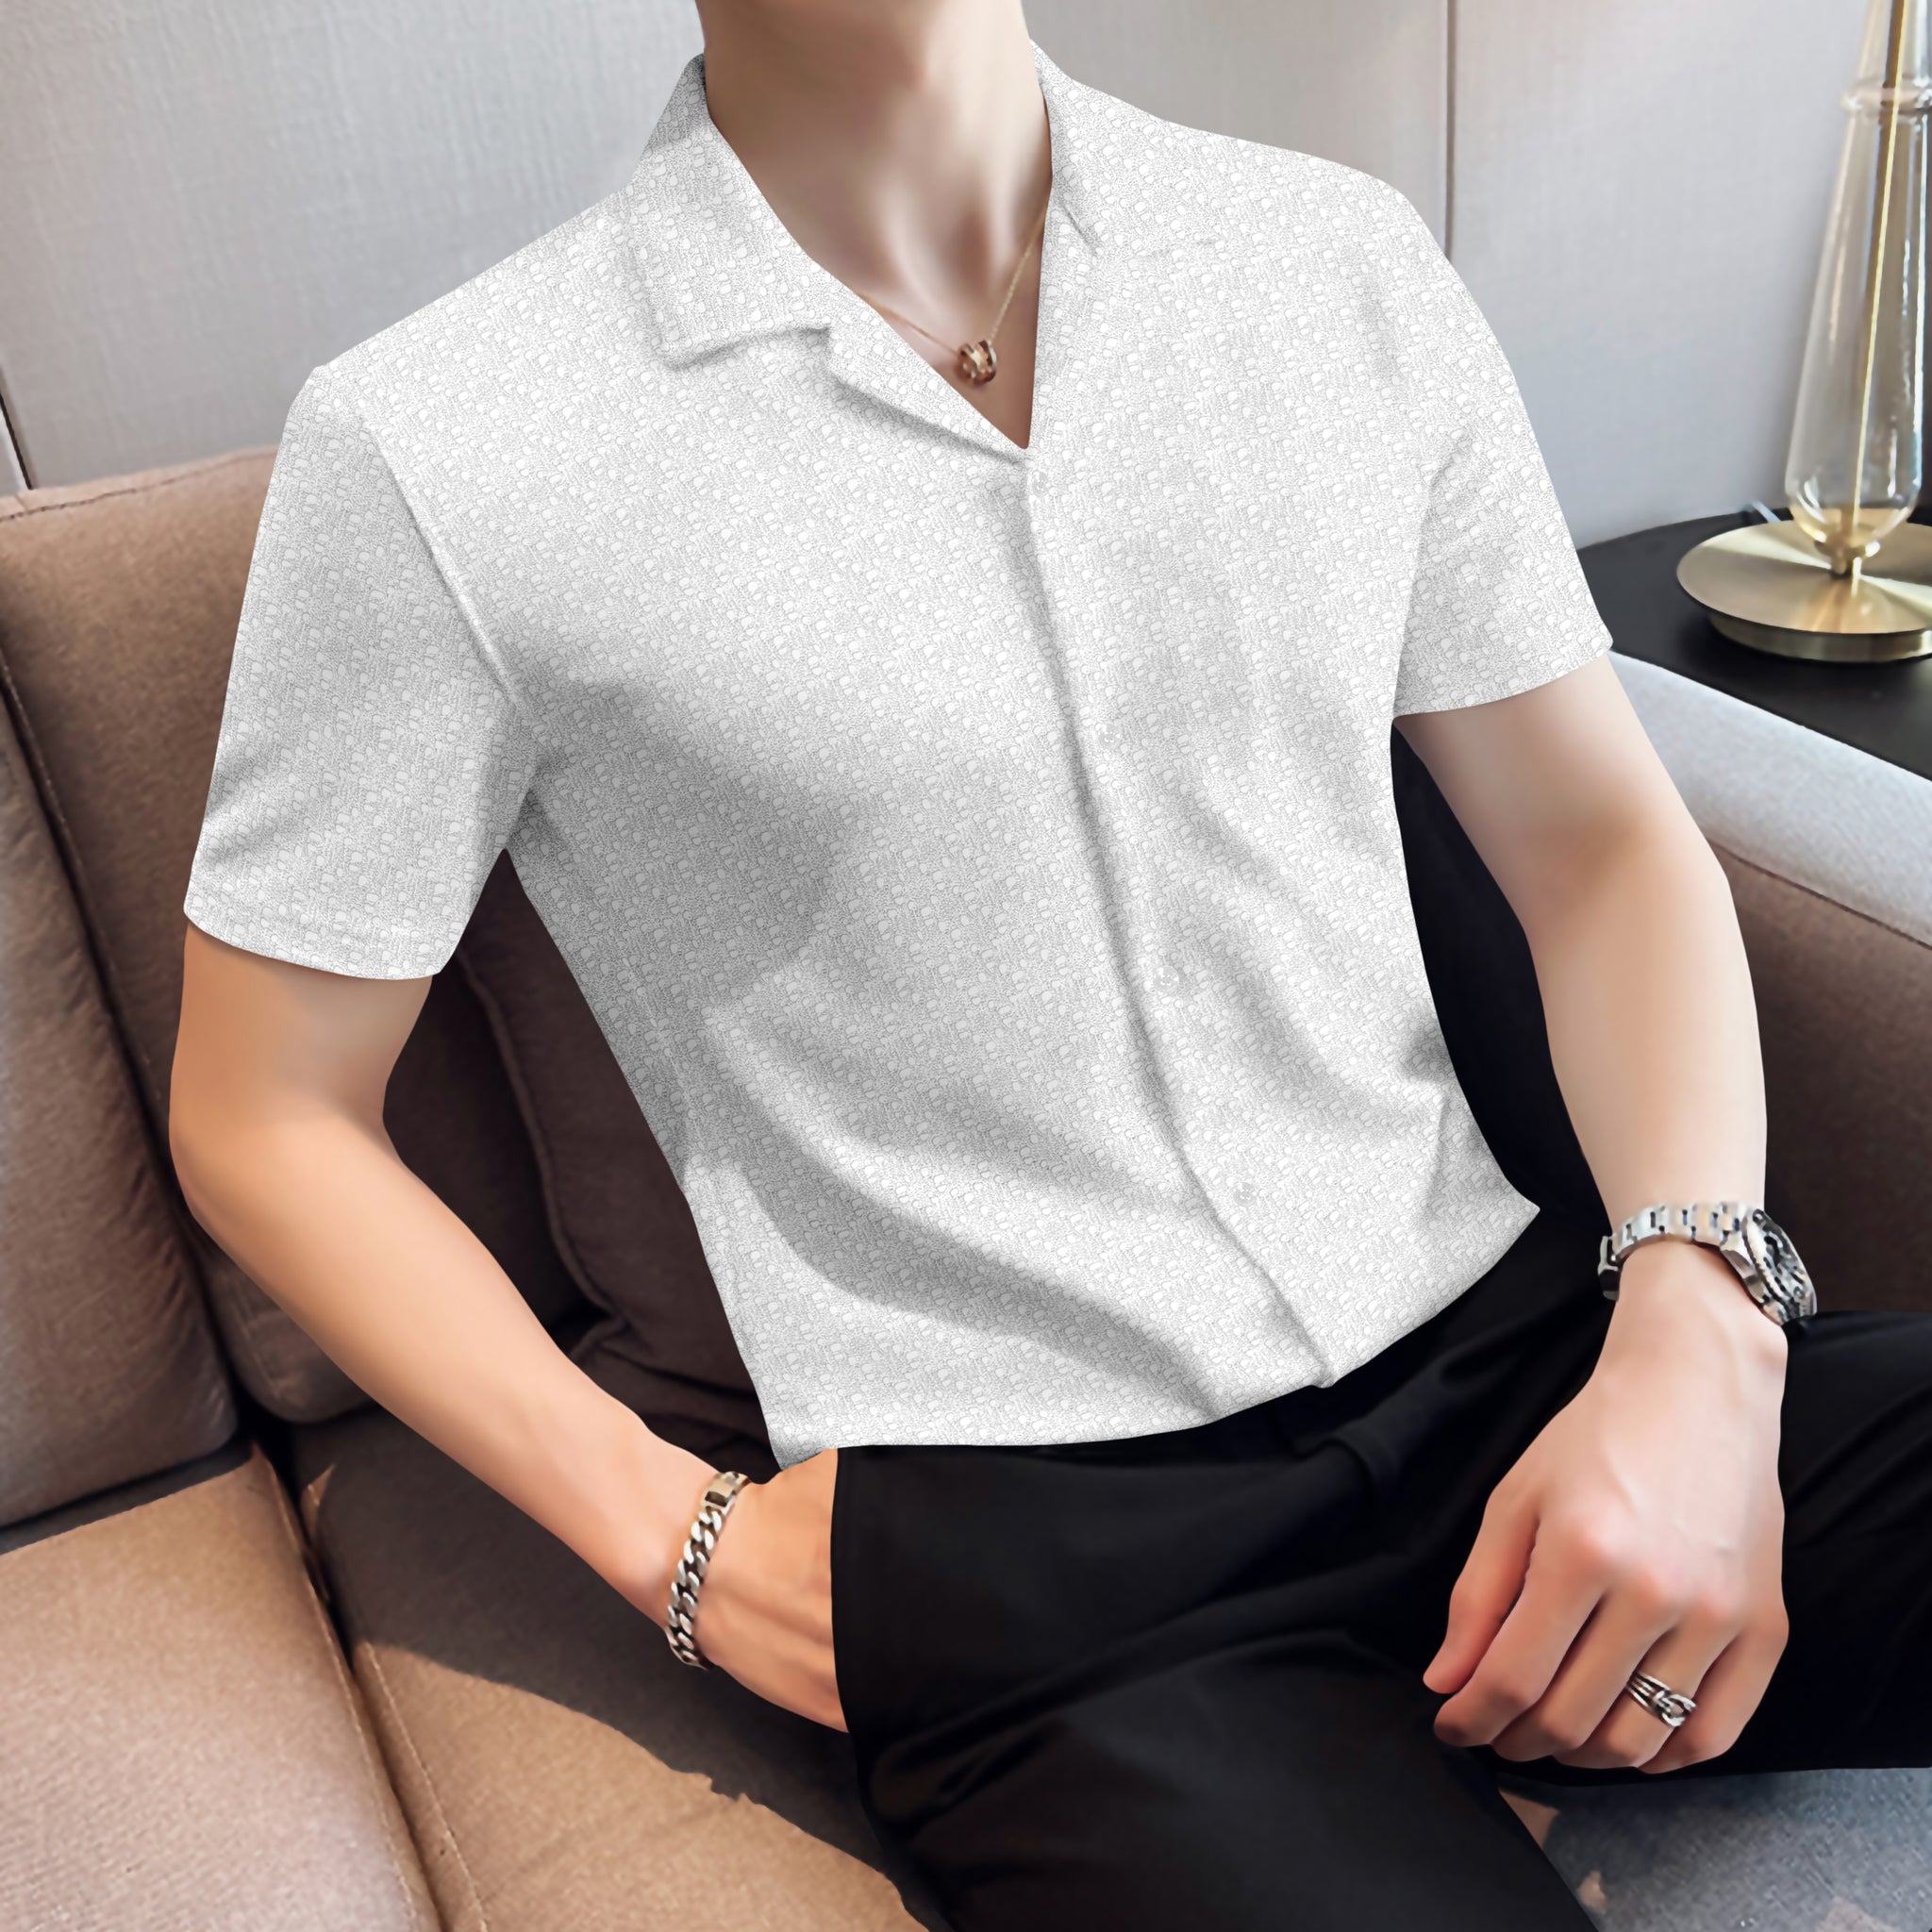 White Textured Casual Half Sleeve Shirt